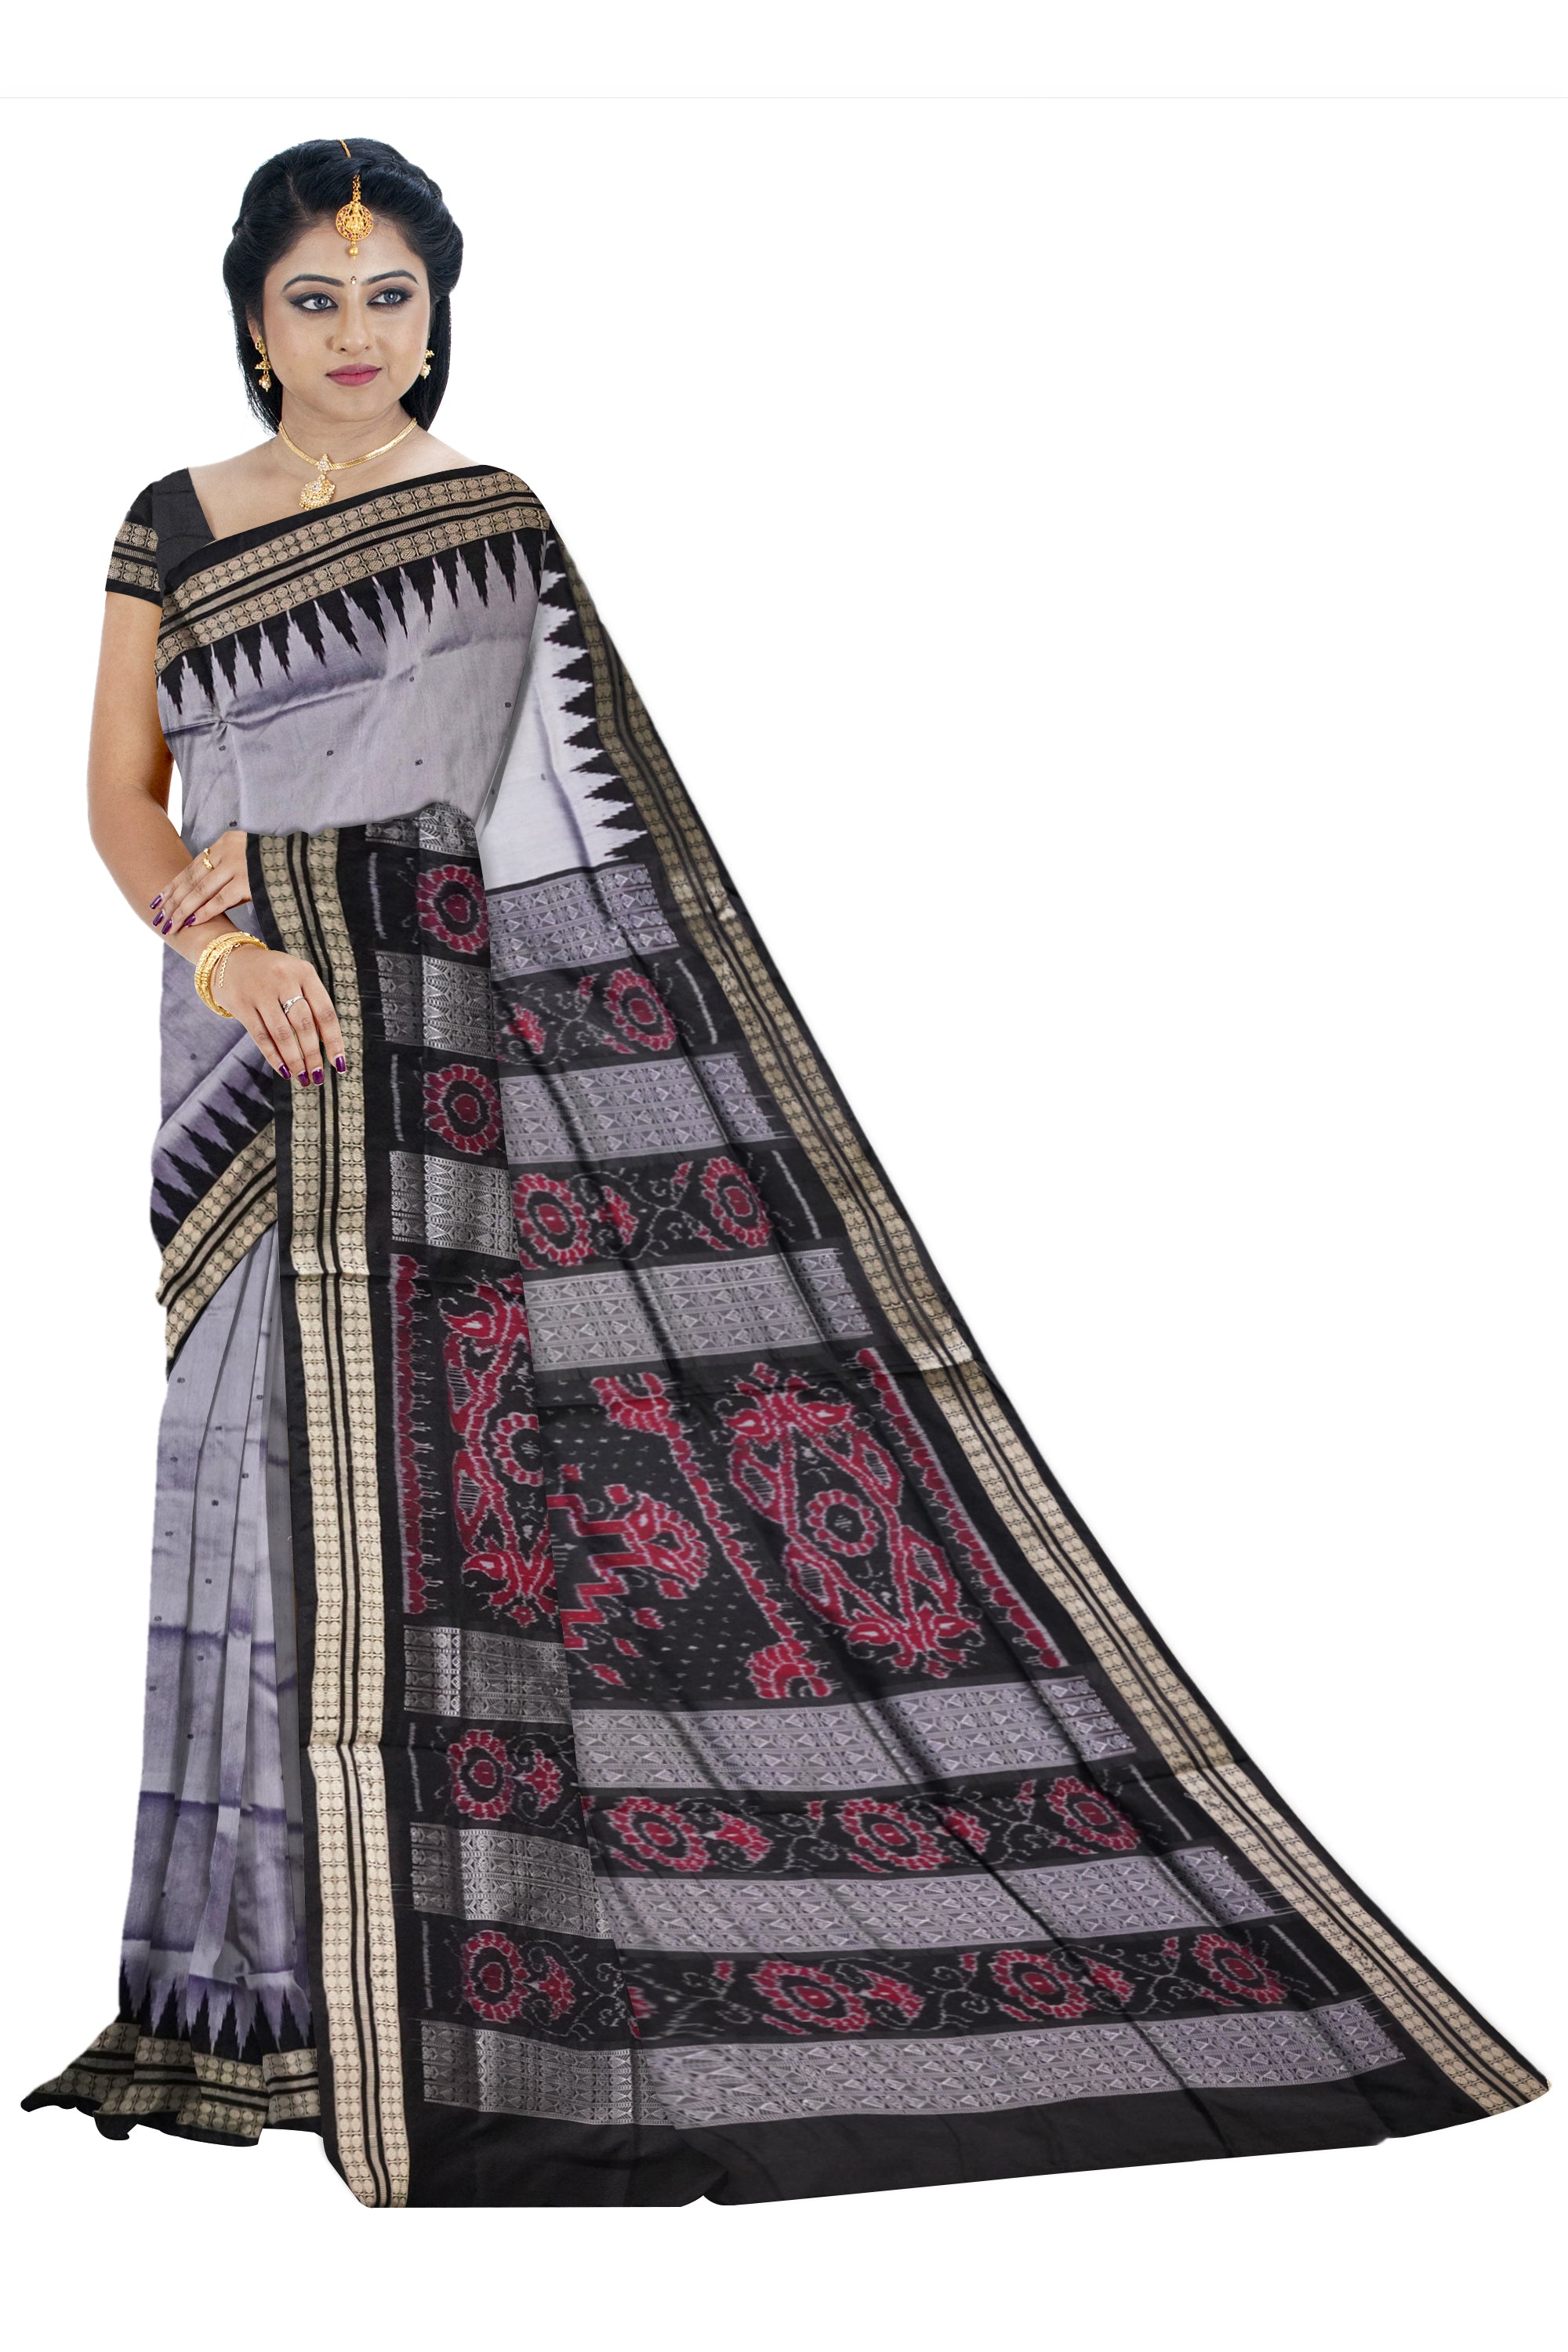 Small booty pattern plain pata saree in silver and black color. - Koshali Arts & Crafts Enterprise